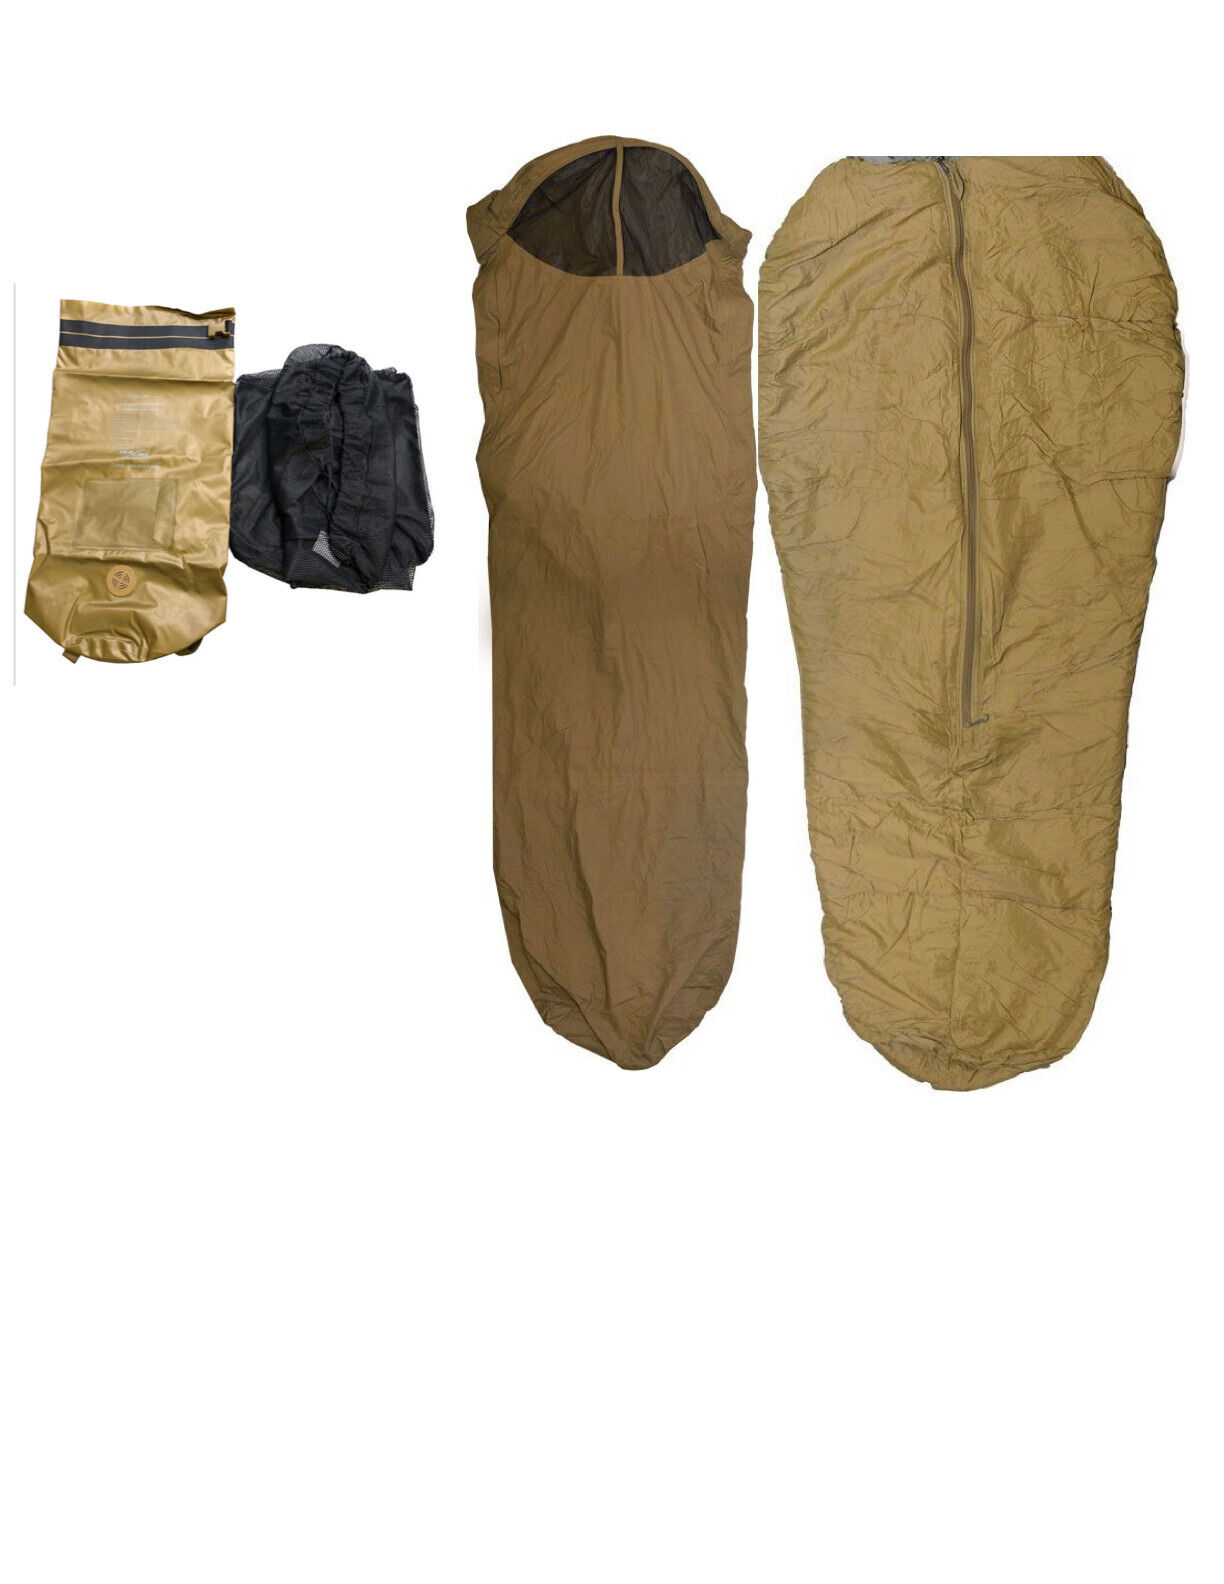 USMC 3 SEASON Sleeping IMPROVED System BIVY Cover Mesh Bag Waterproof Stuff Sack